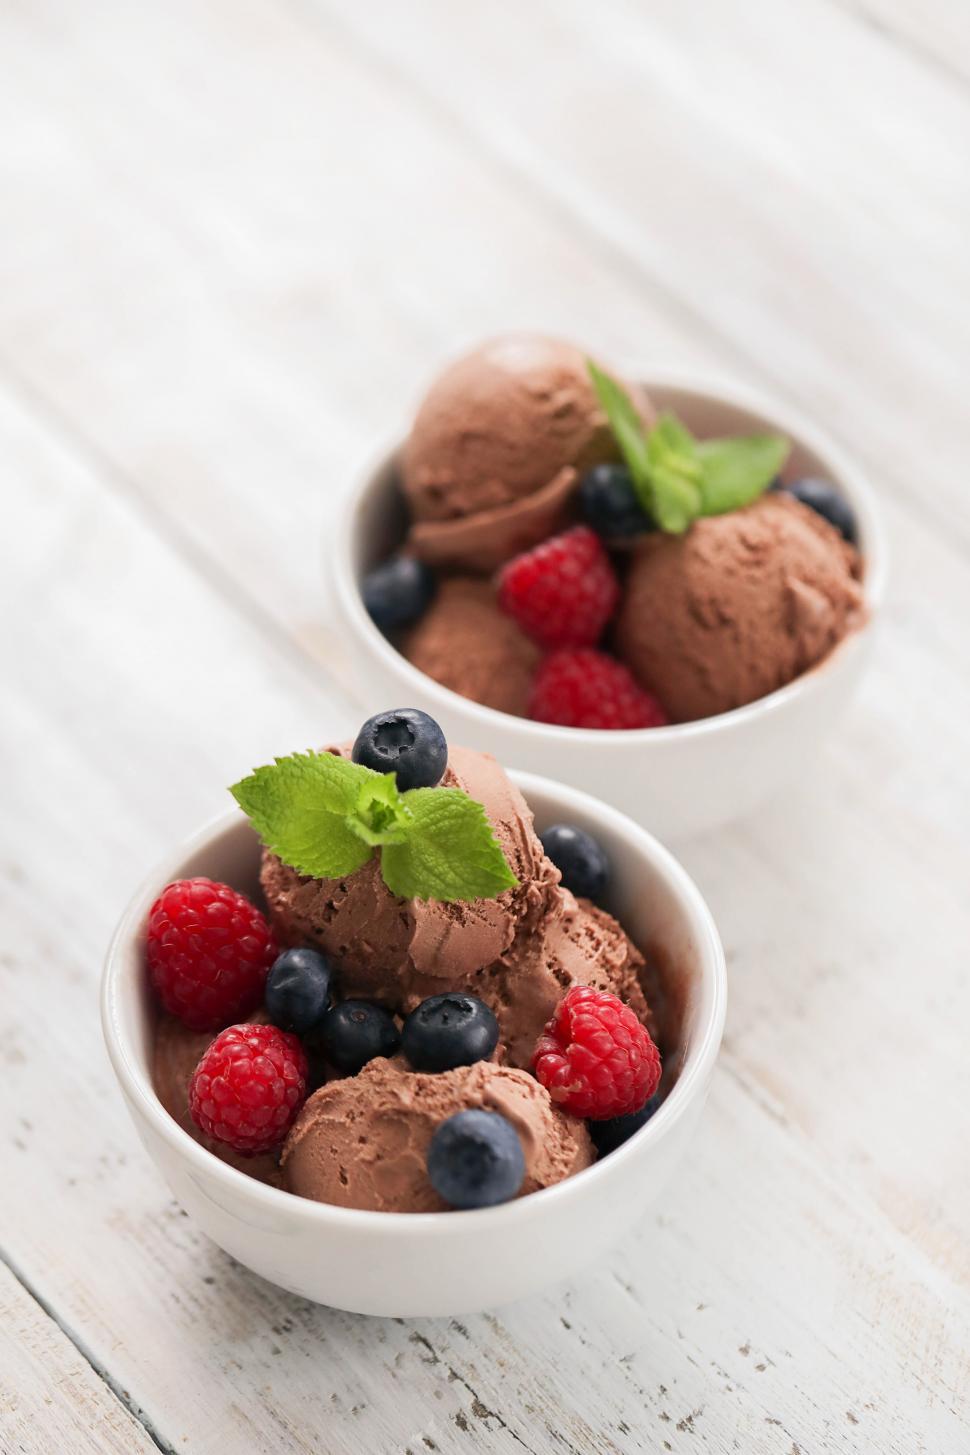 Free Image of Ice cream with berries 